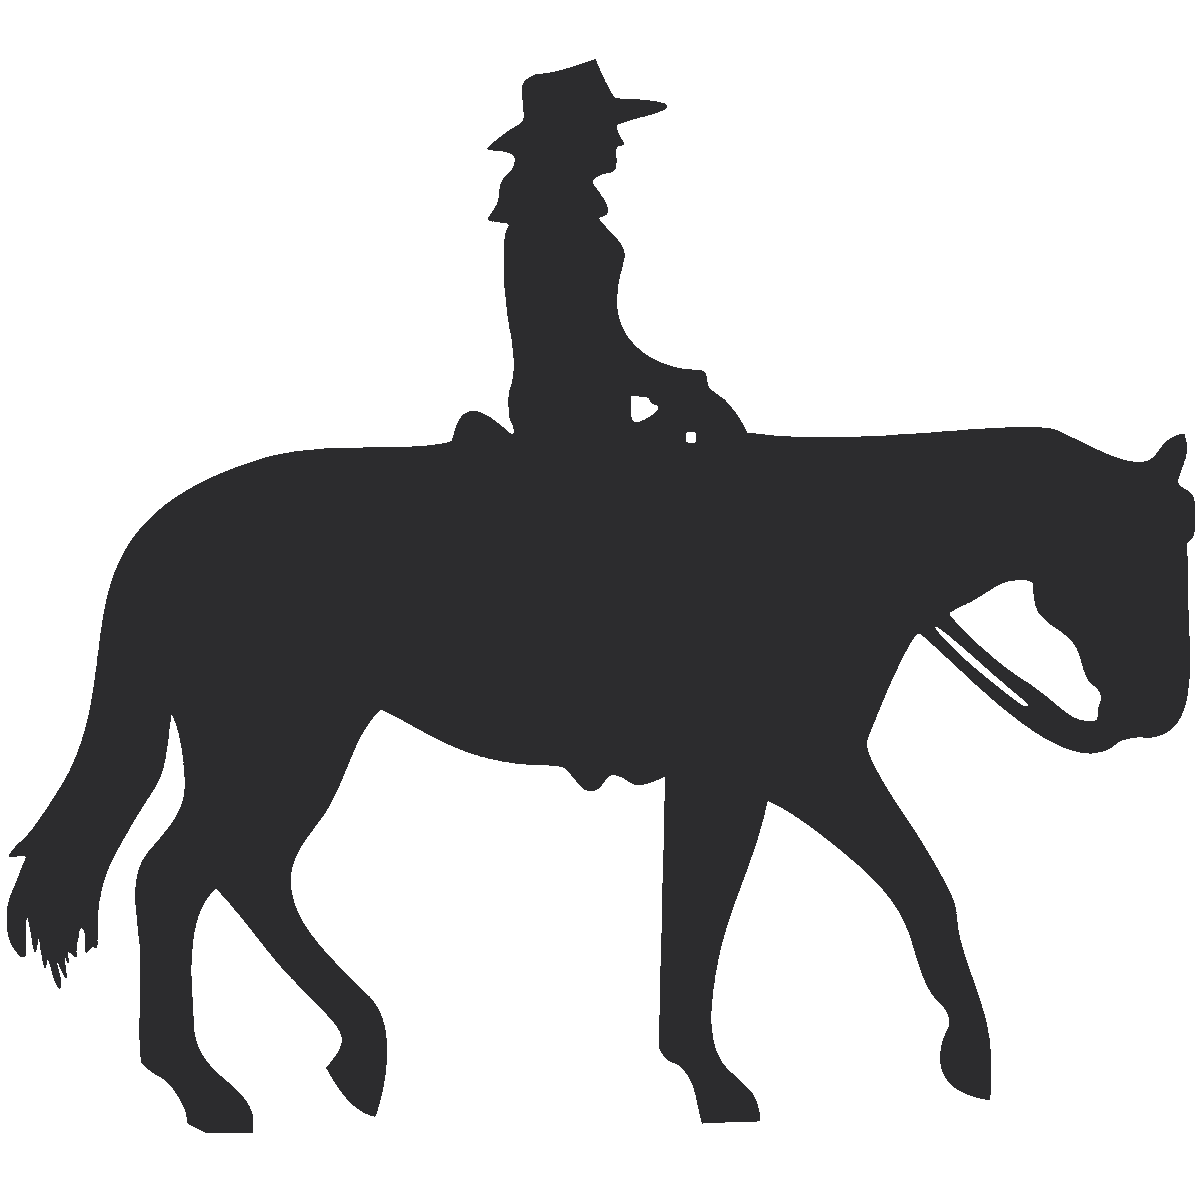 Cowboy horseback riding